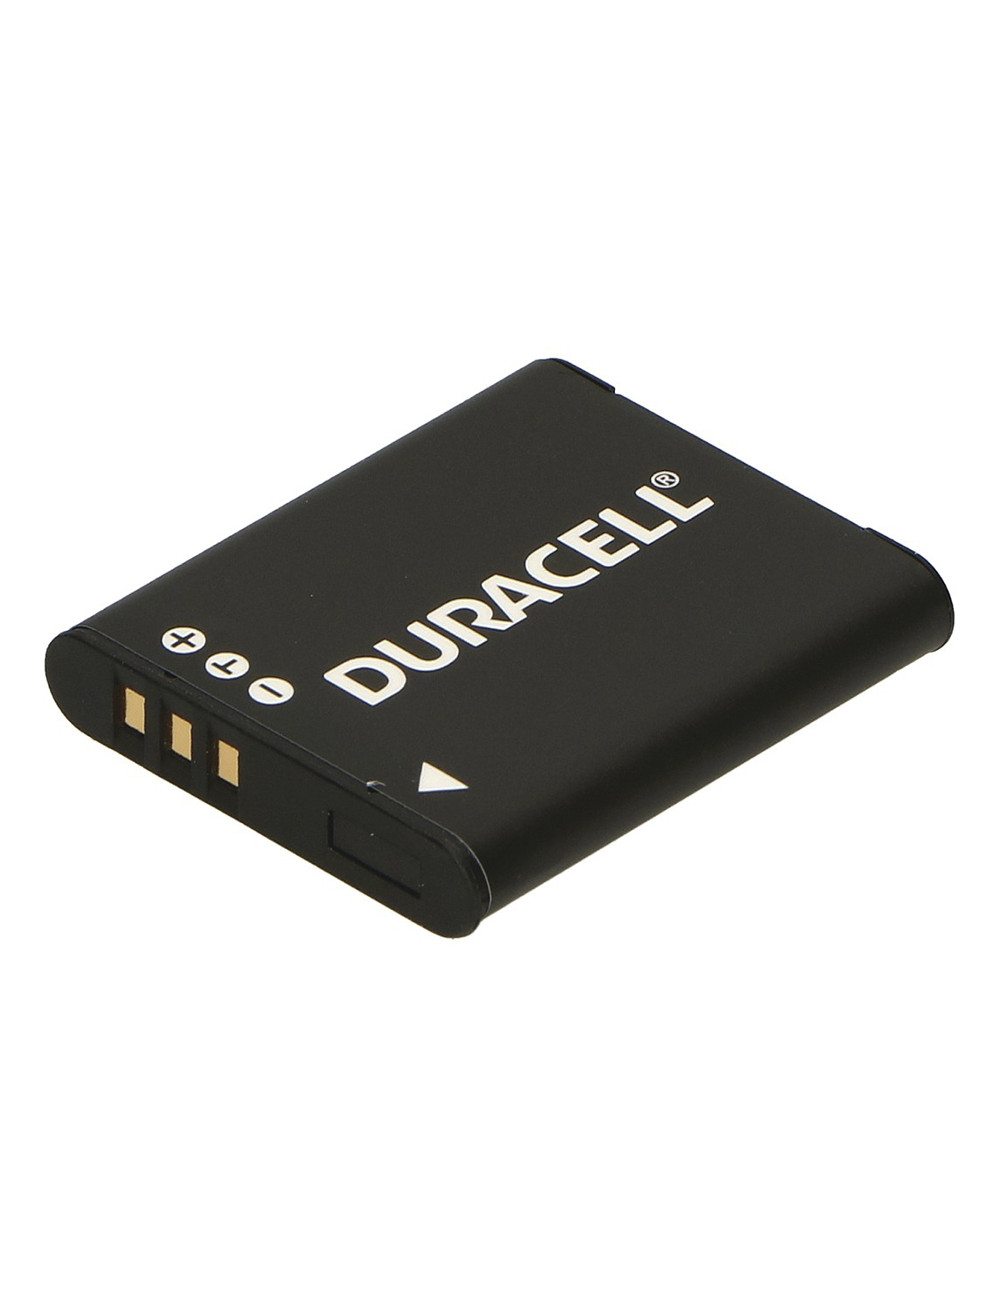 Batería compatible Olympus LI-50B 3,7V 770mAh 2,8Wh Duracell - DR9686 -  - 5055190114131 - 1